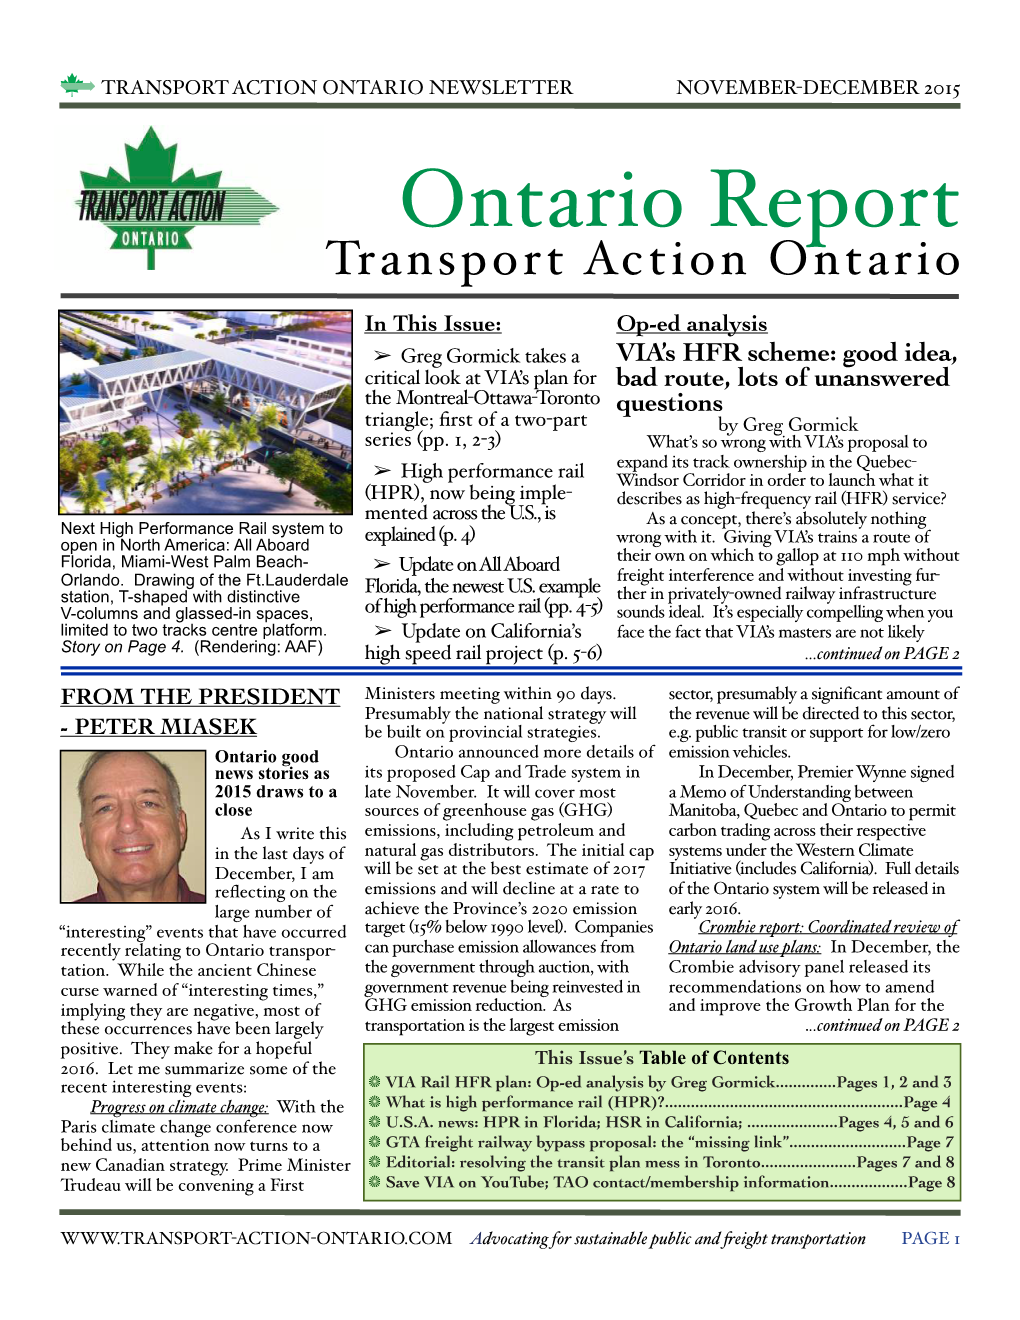 Ontario Report Transport Action Ontario